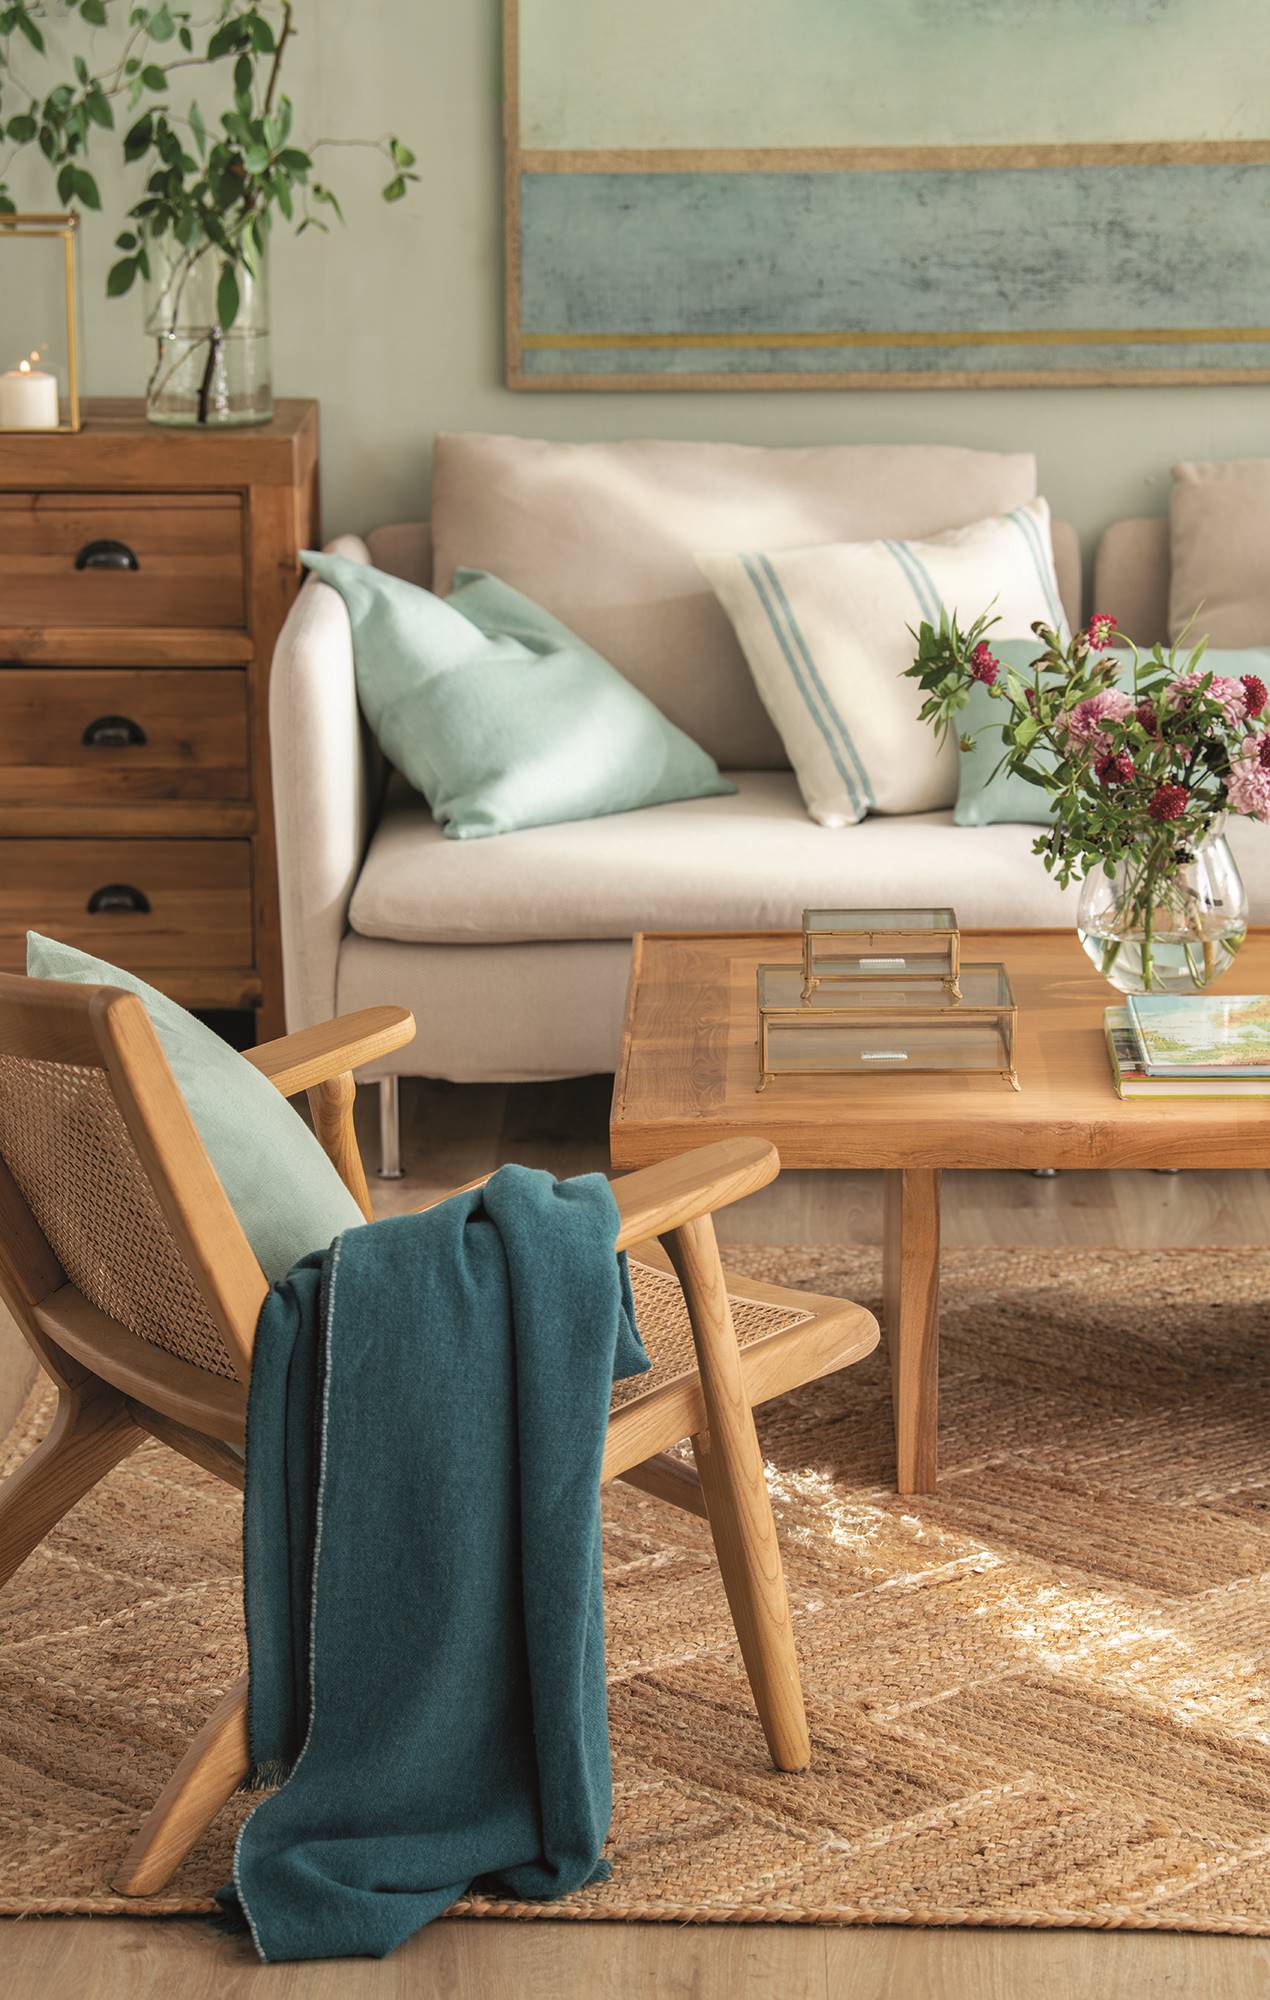 Salón con mesa de centro, butaca de madera y sofá gris sobre alfombra de fibras naturales.